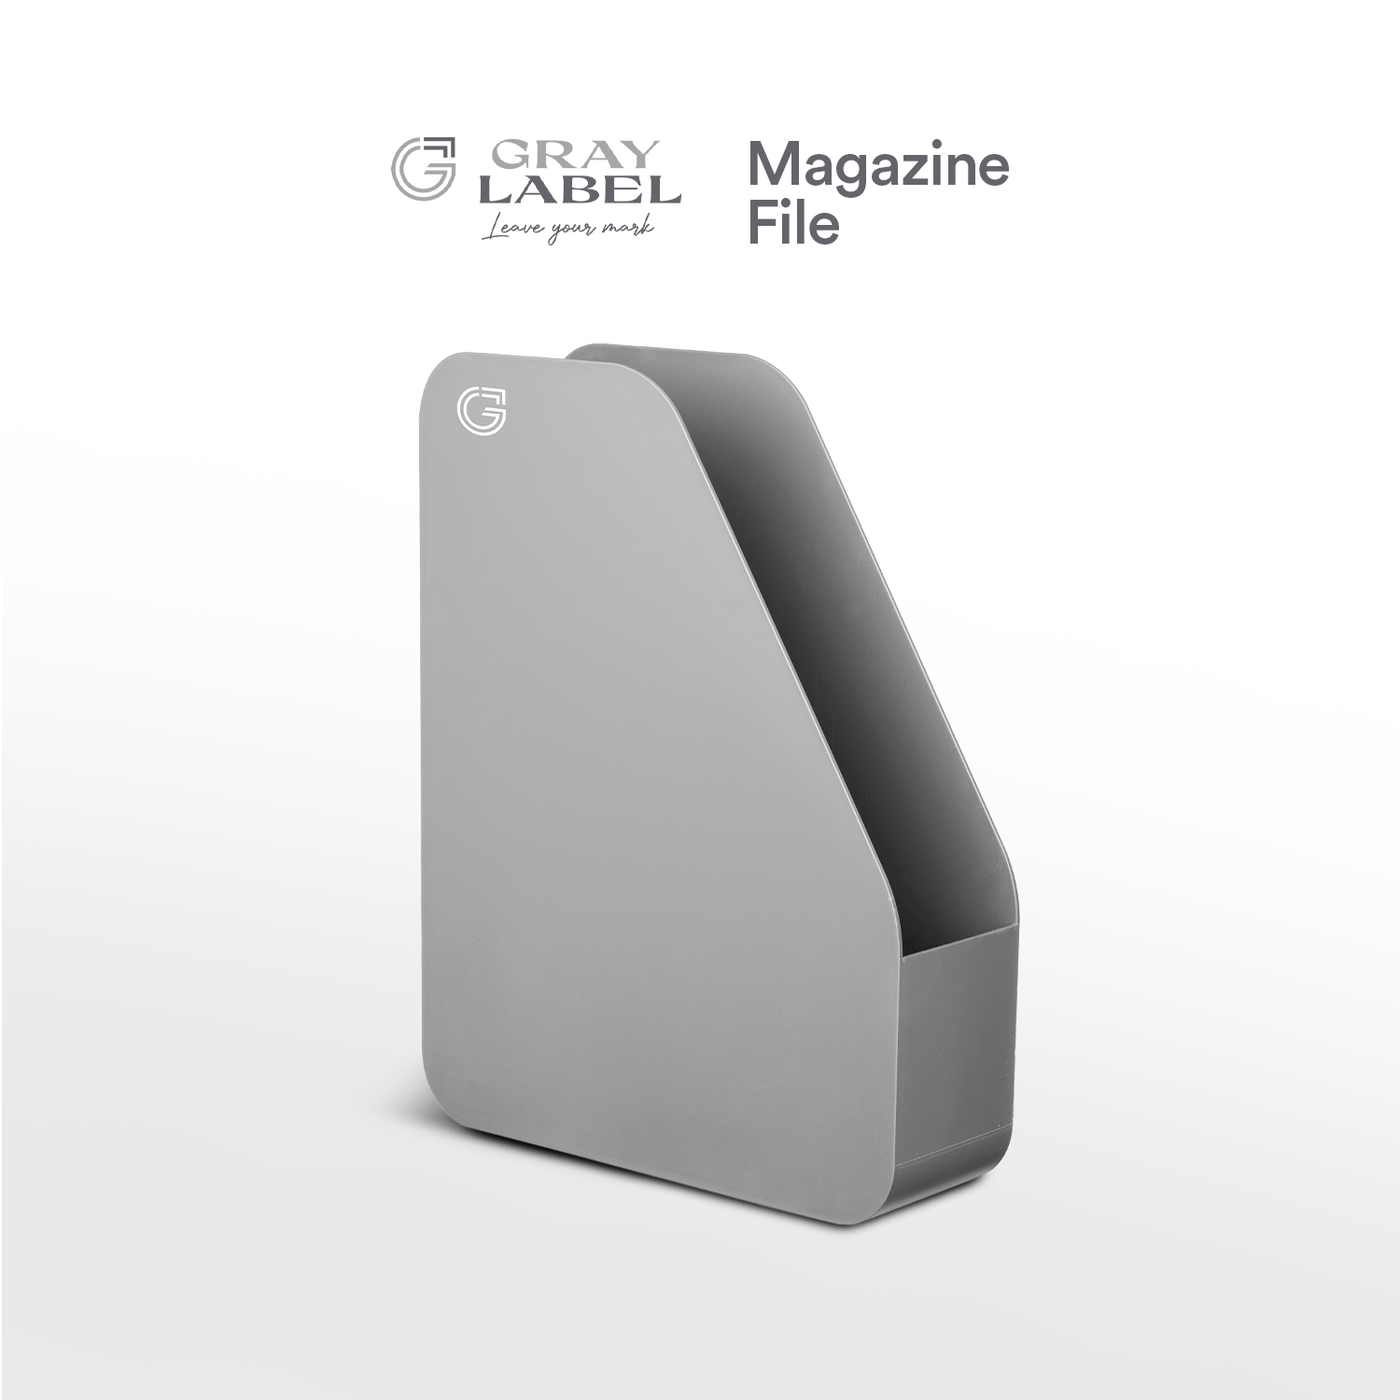 GRAY LABEL Premium Magazine File Organizer